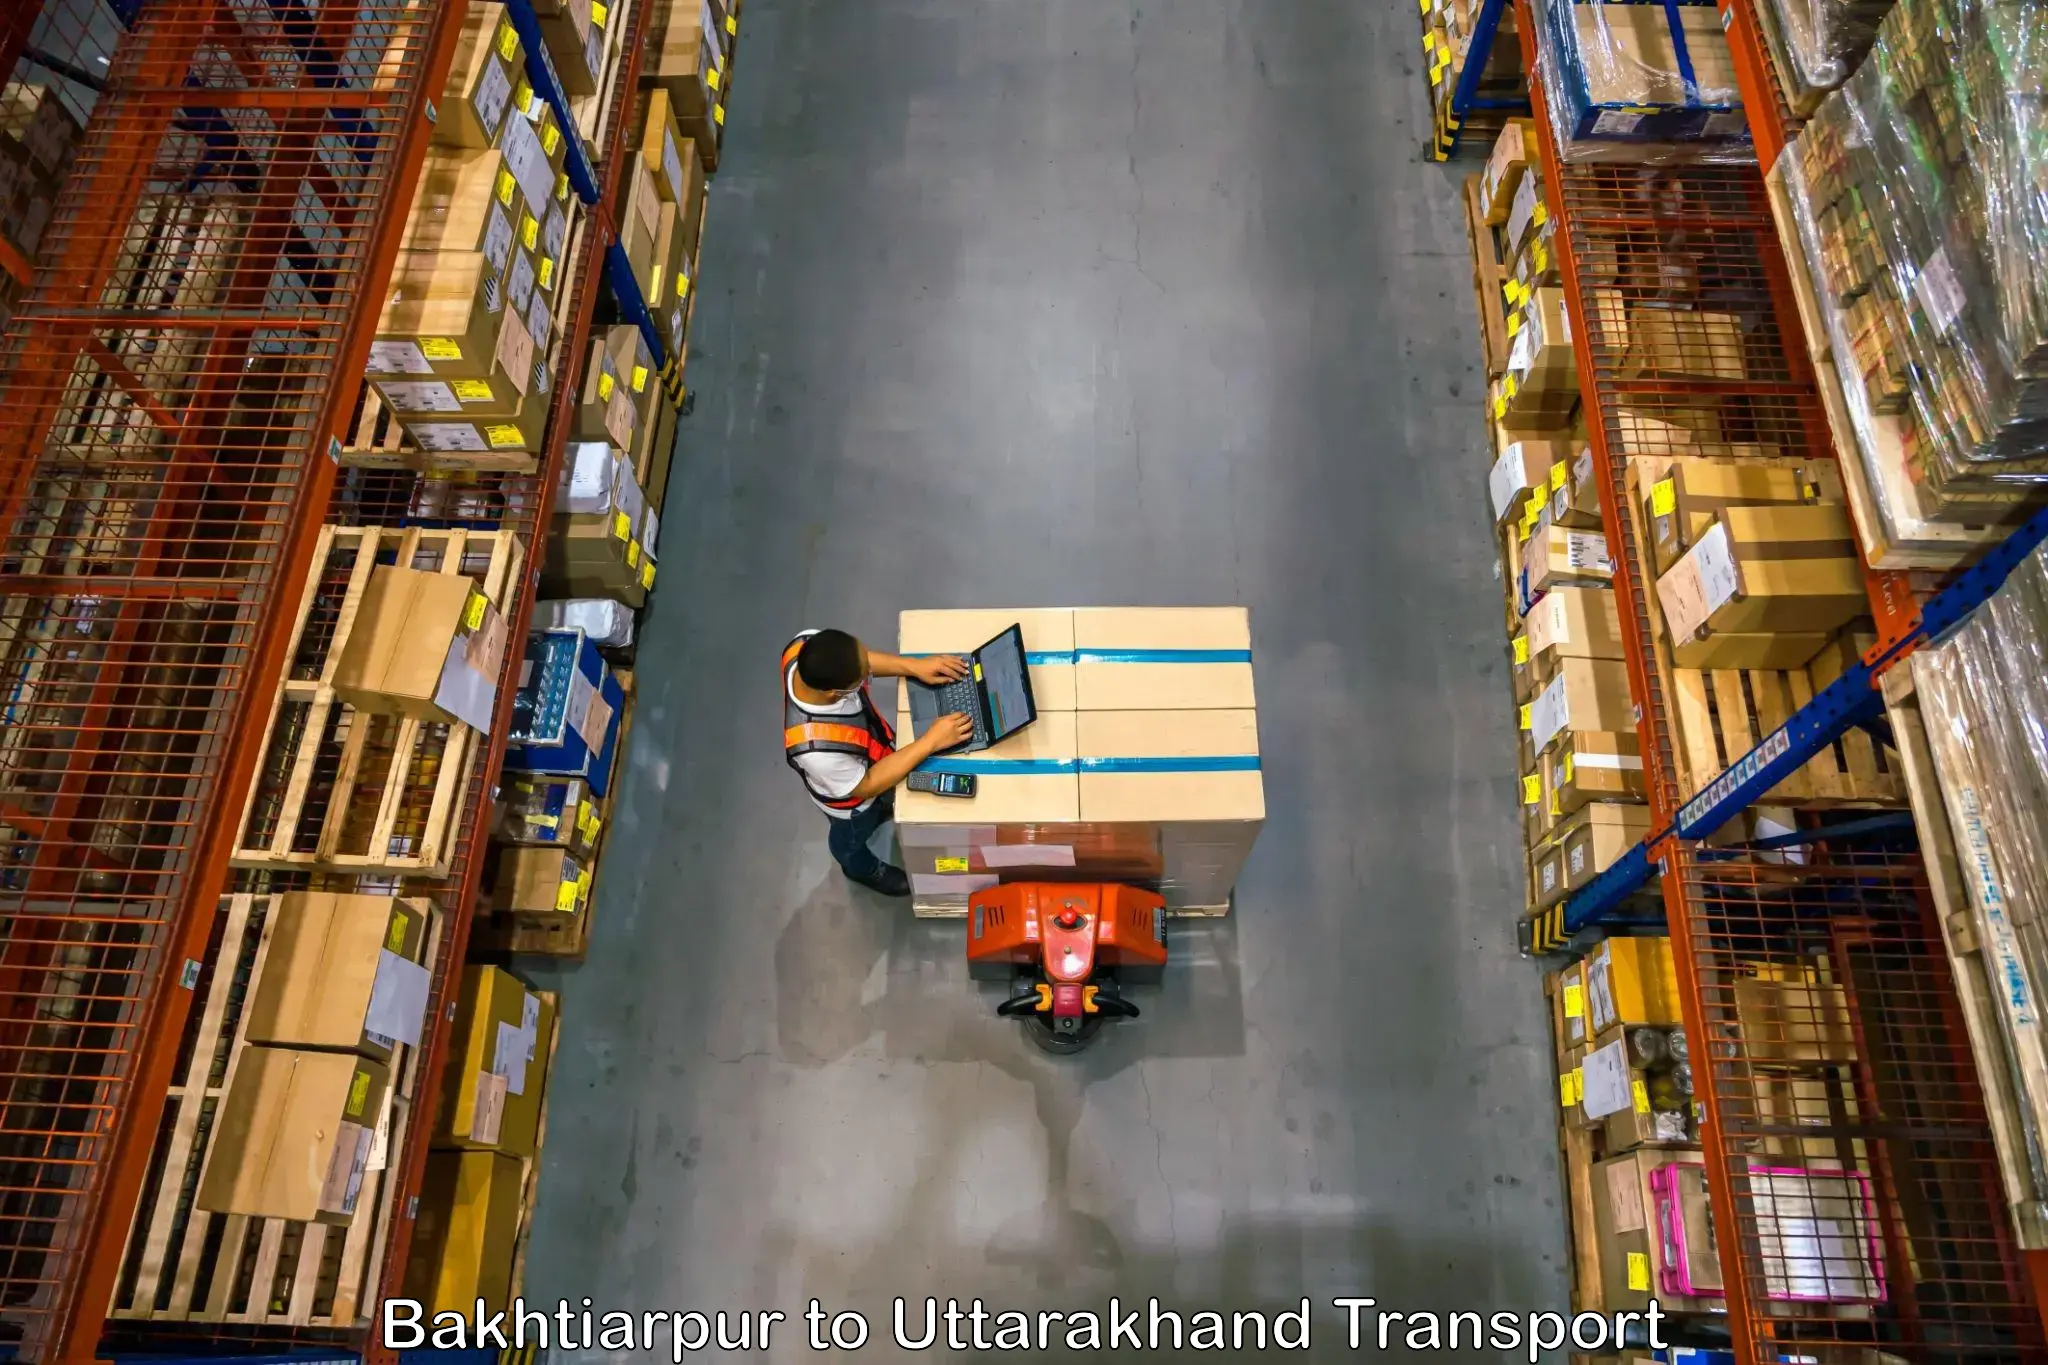 Truck transport companies in India Bakhtiarpur to Pauri